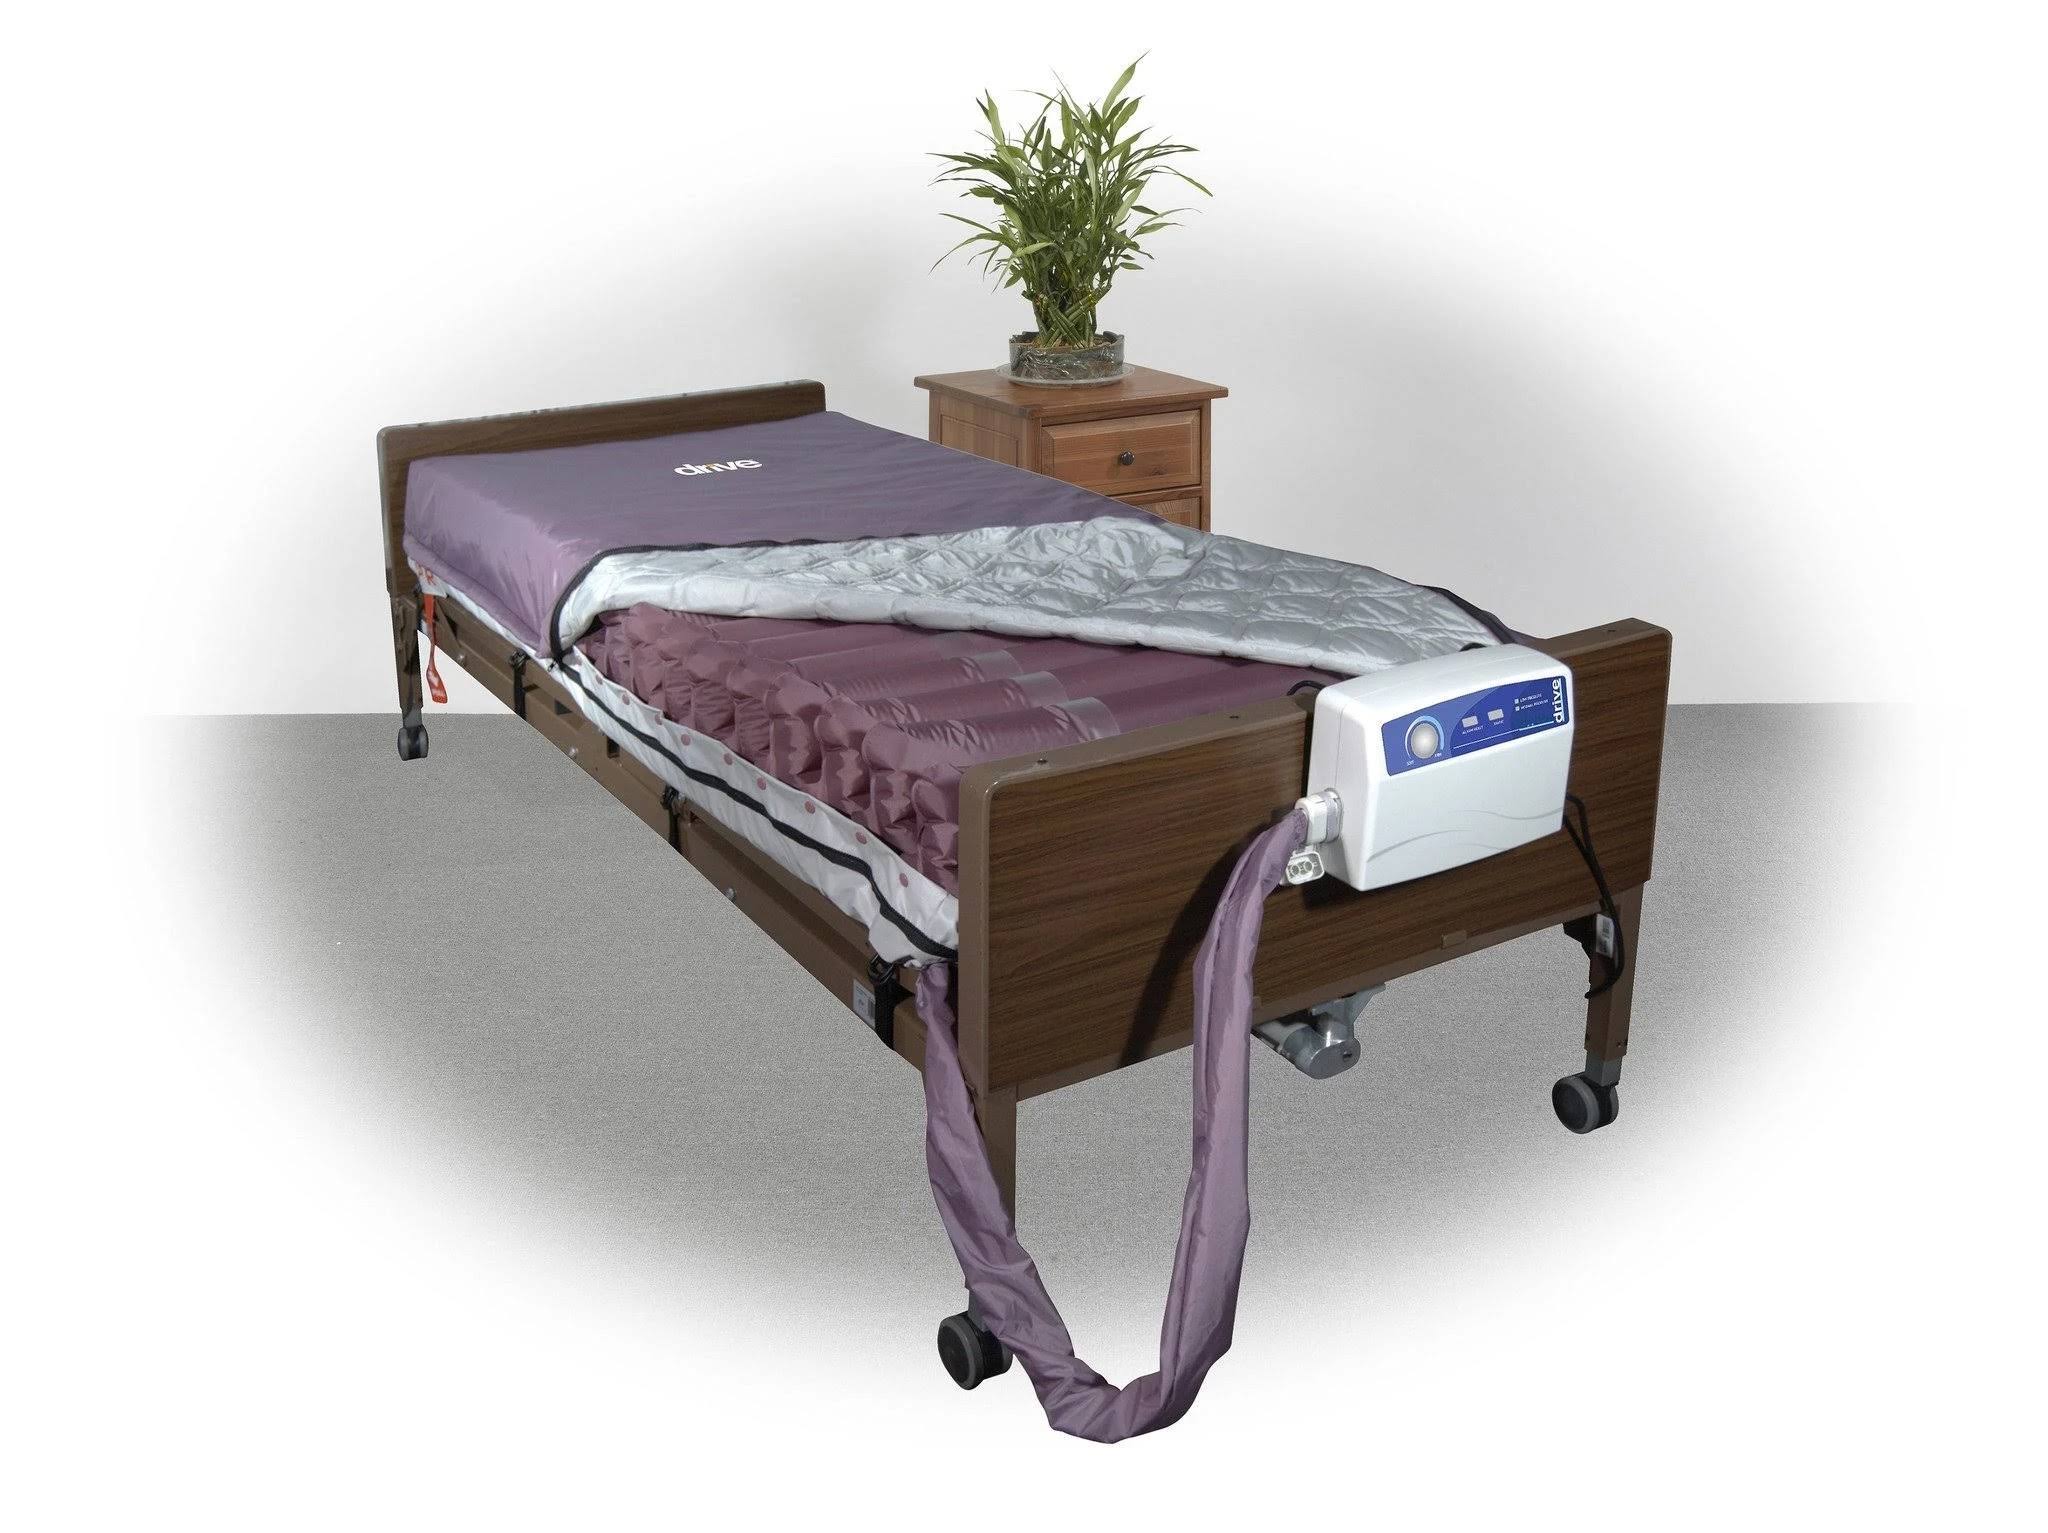 med-aire alternating pressure mattress model 14027